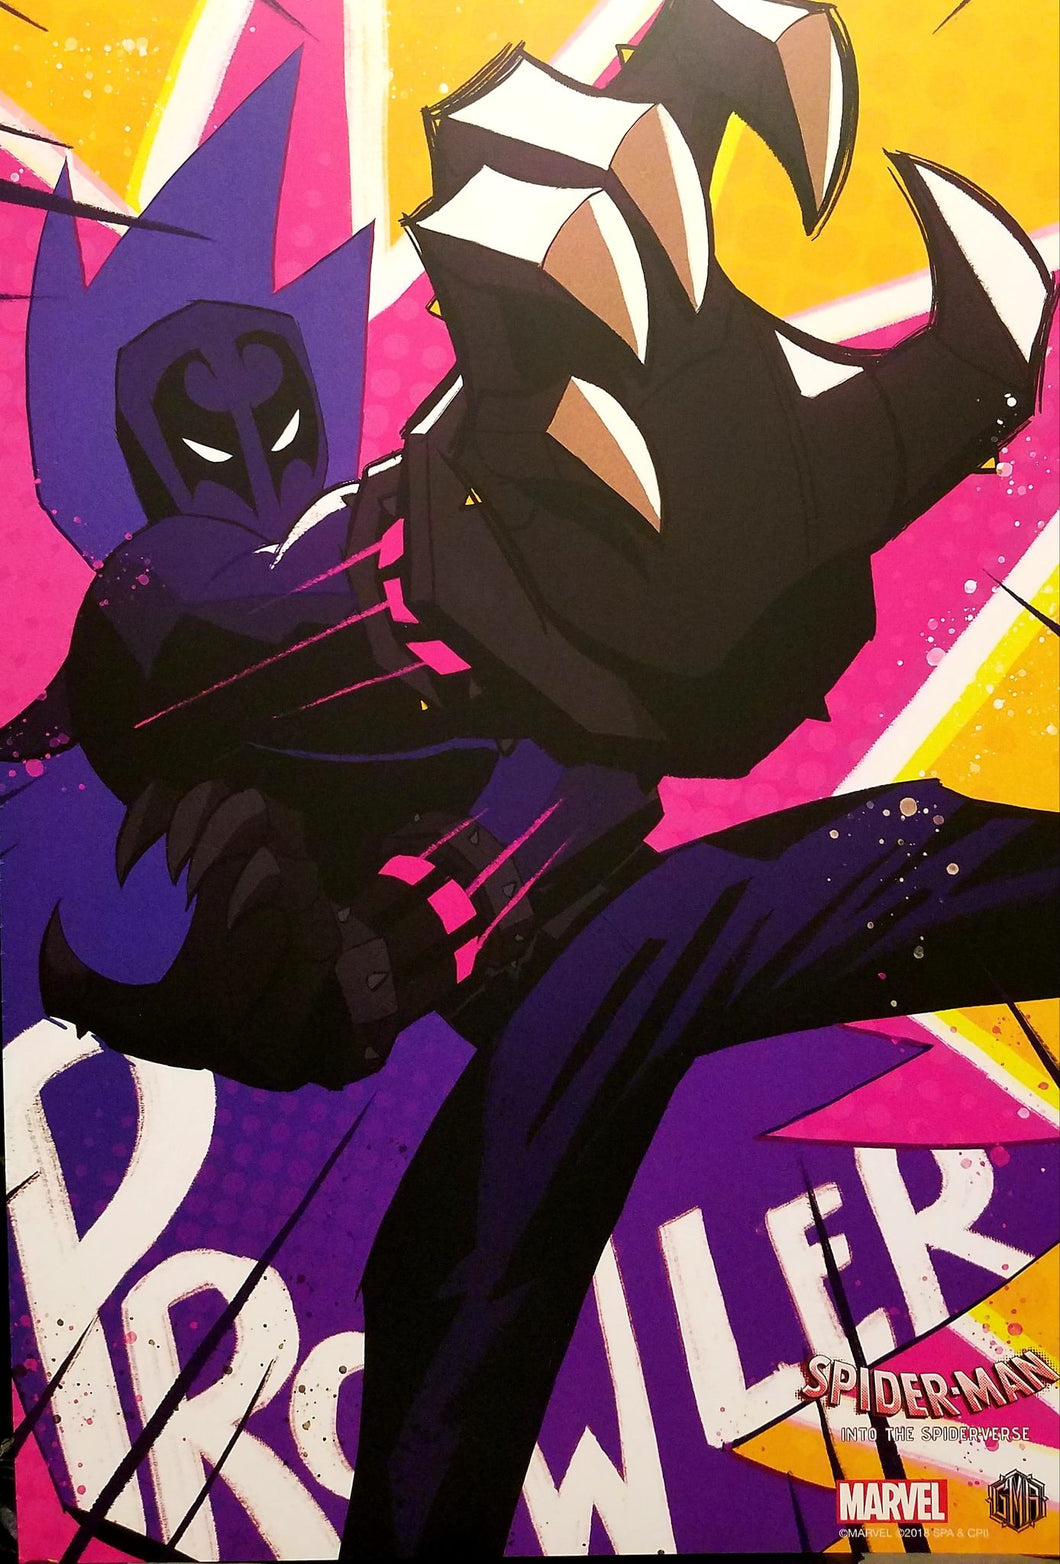 Spider-Verse Prowler 11x16 Art Print Poster (Miles Morales Spider-Man, Marvel Comics)